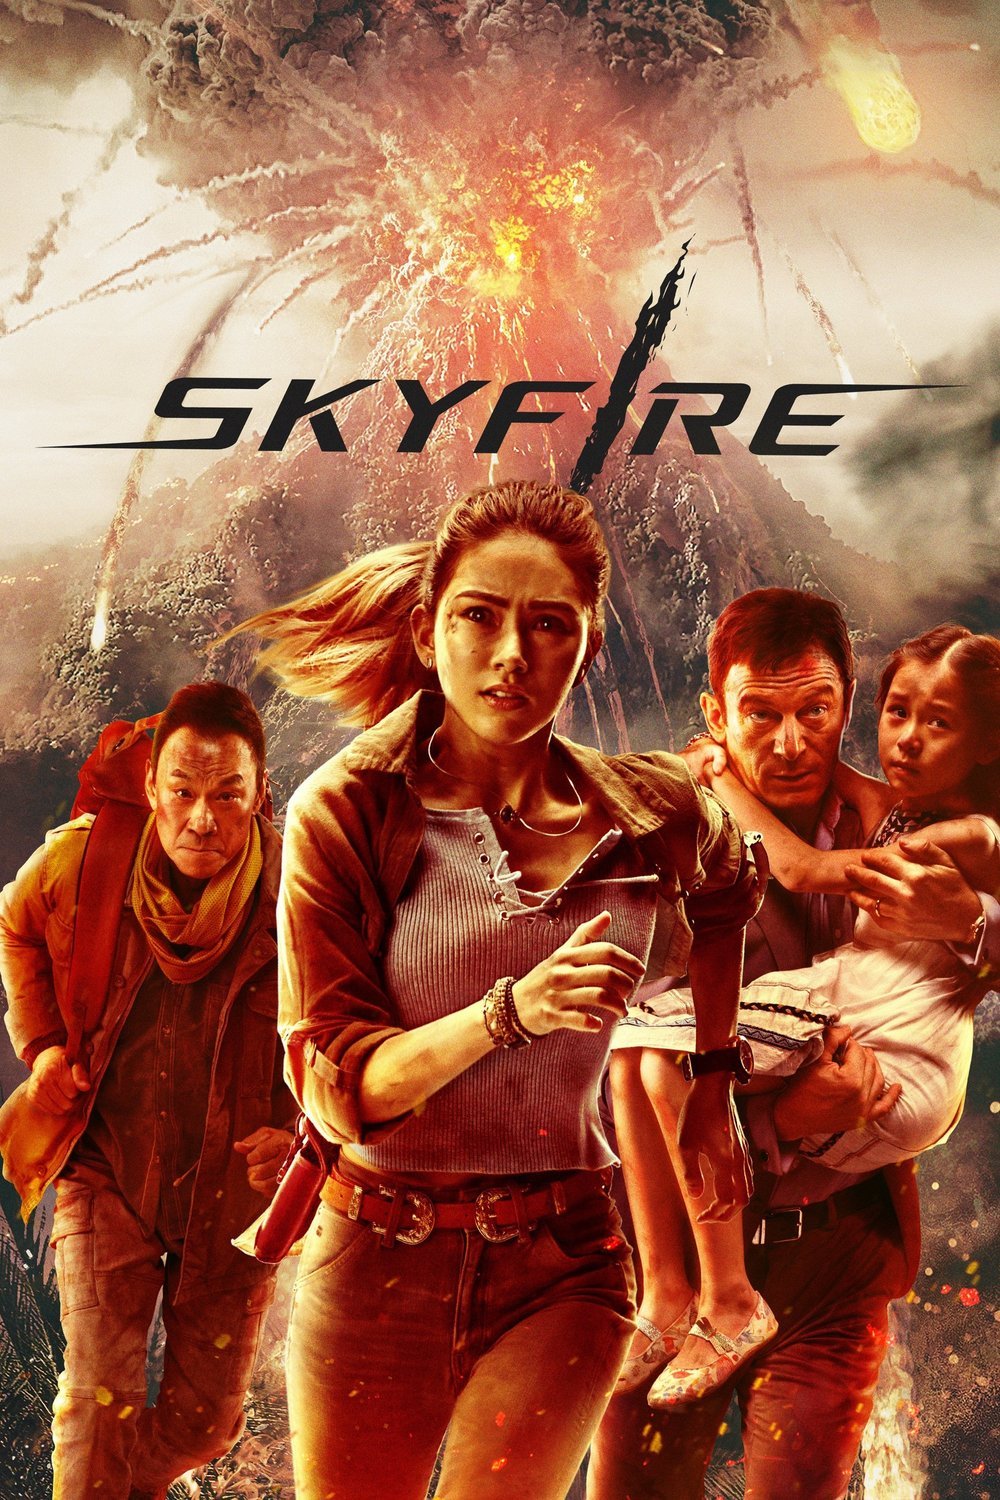 Mandarin poster of the movie Skyfire